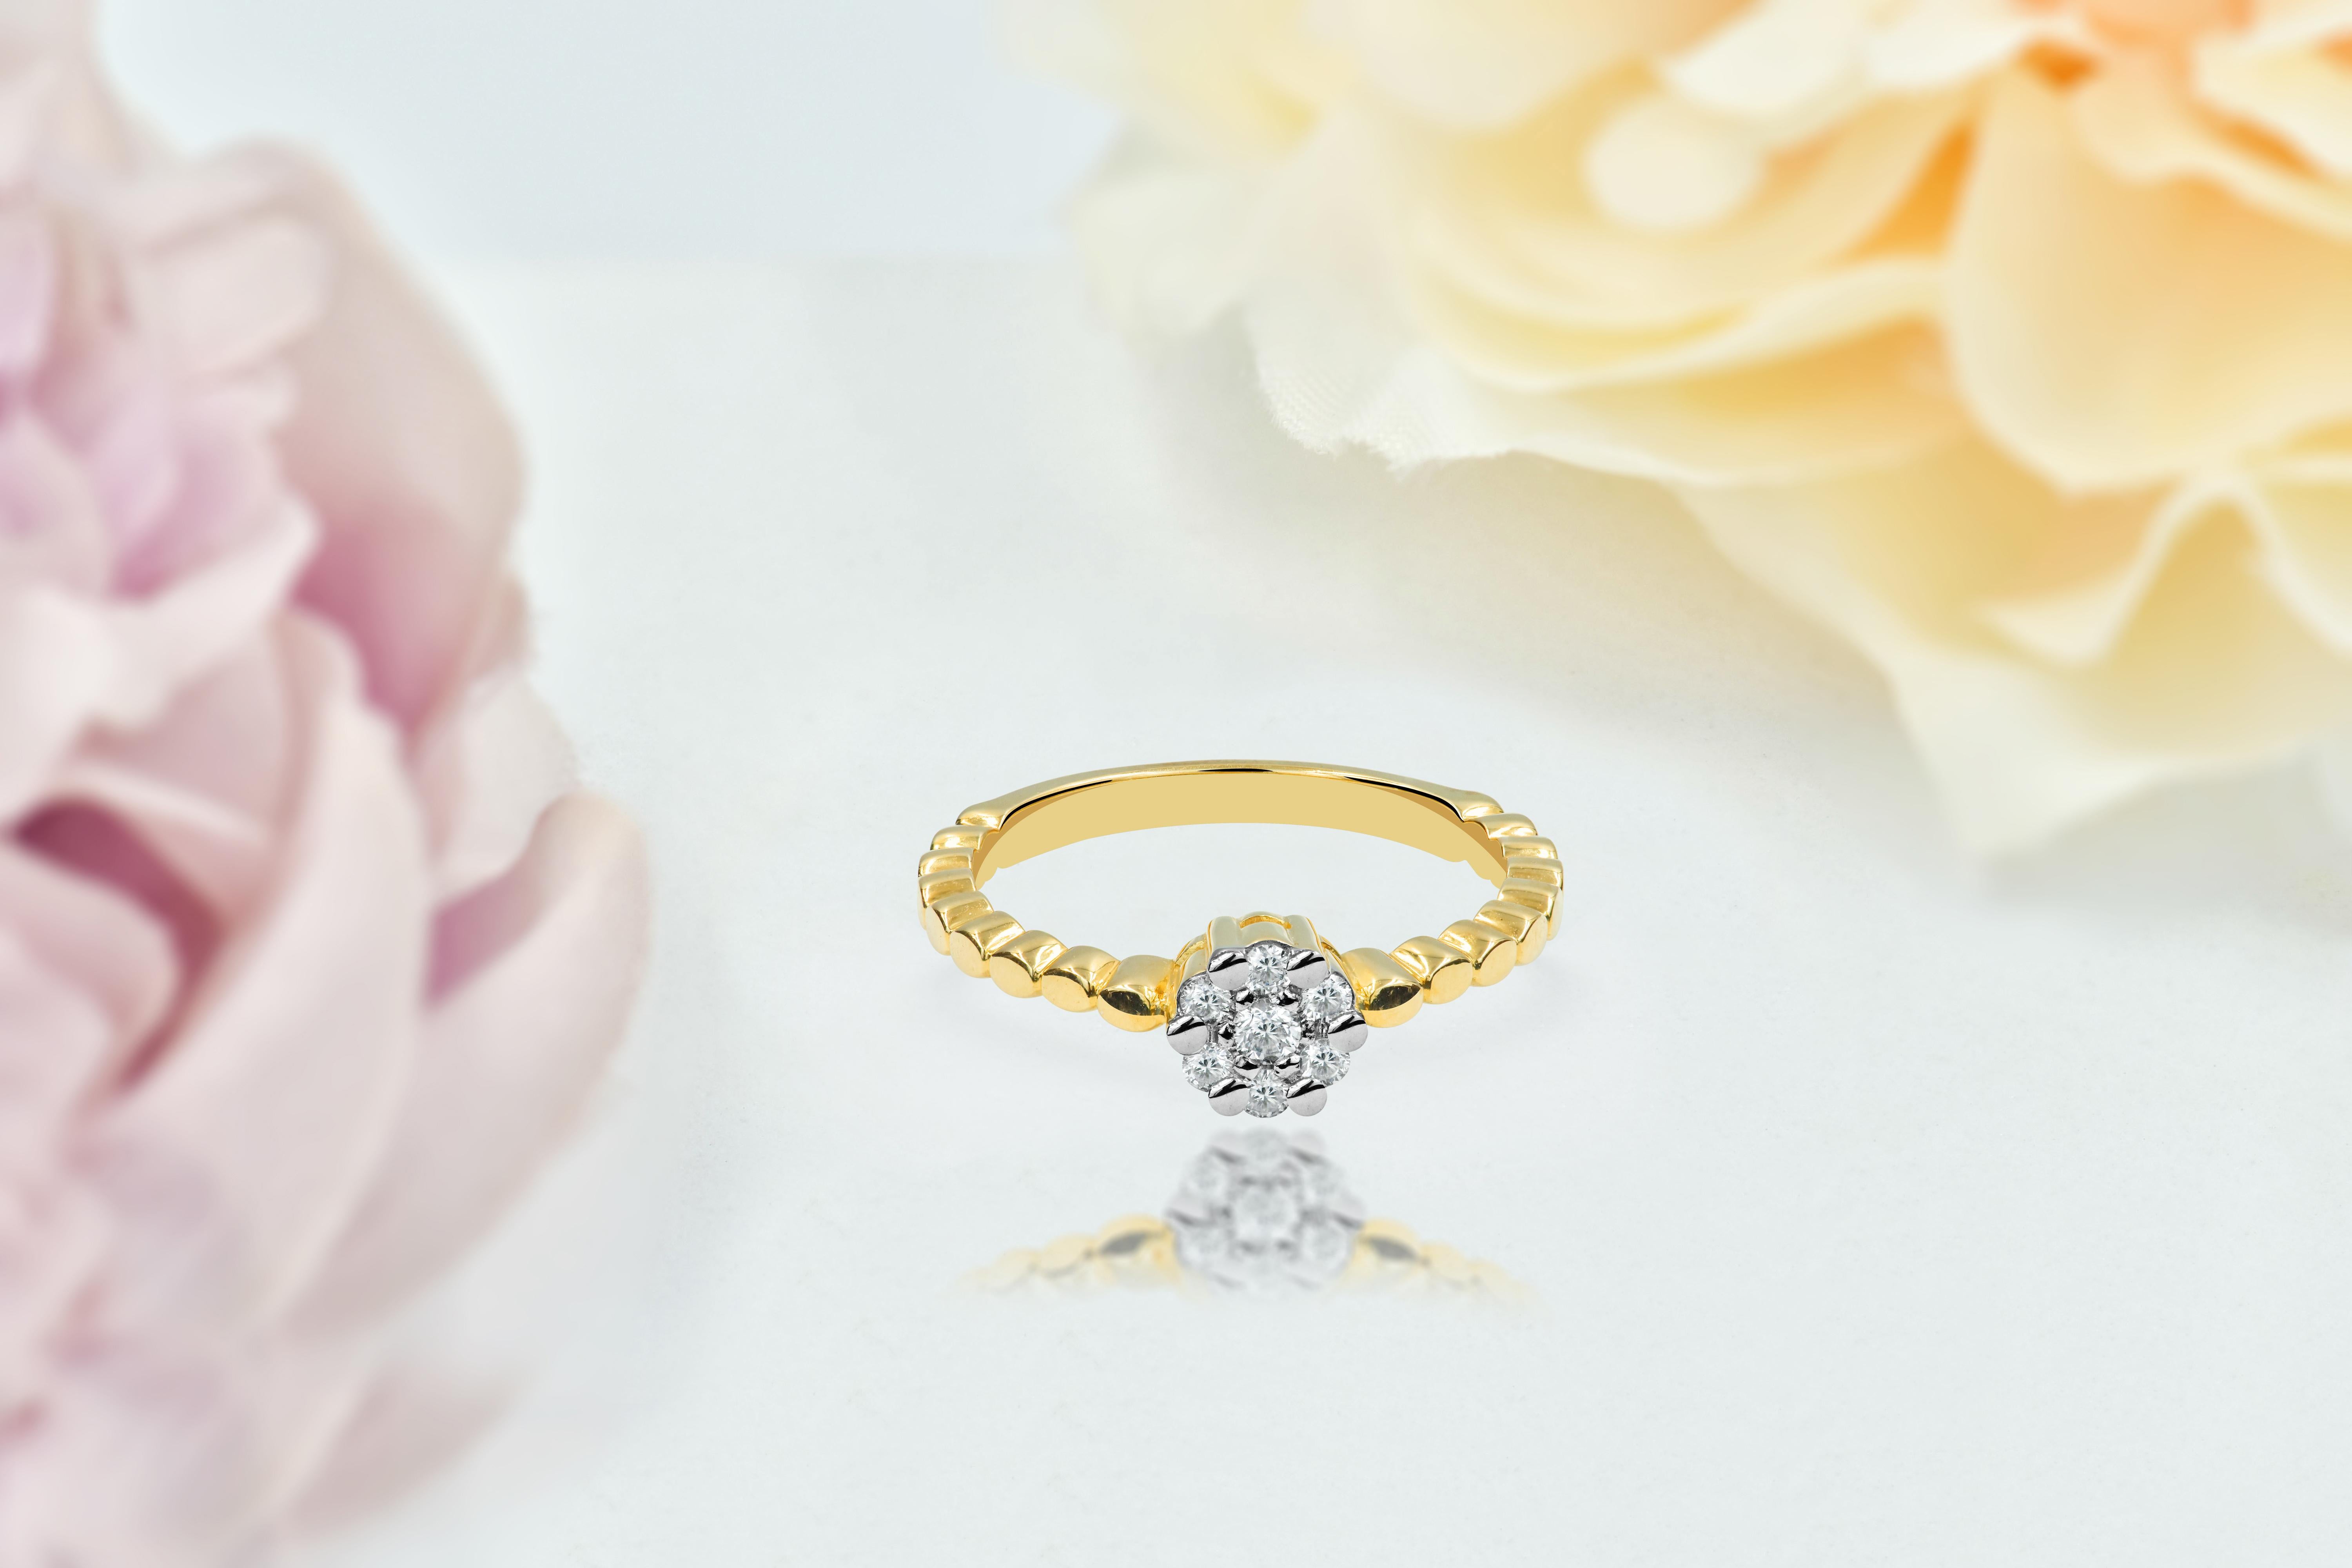 For Sale:  14k Gold Diamond Ring Delicate Engagement Ring Diamond Wedding Ring 5